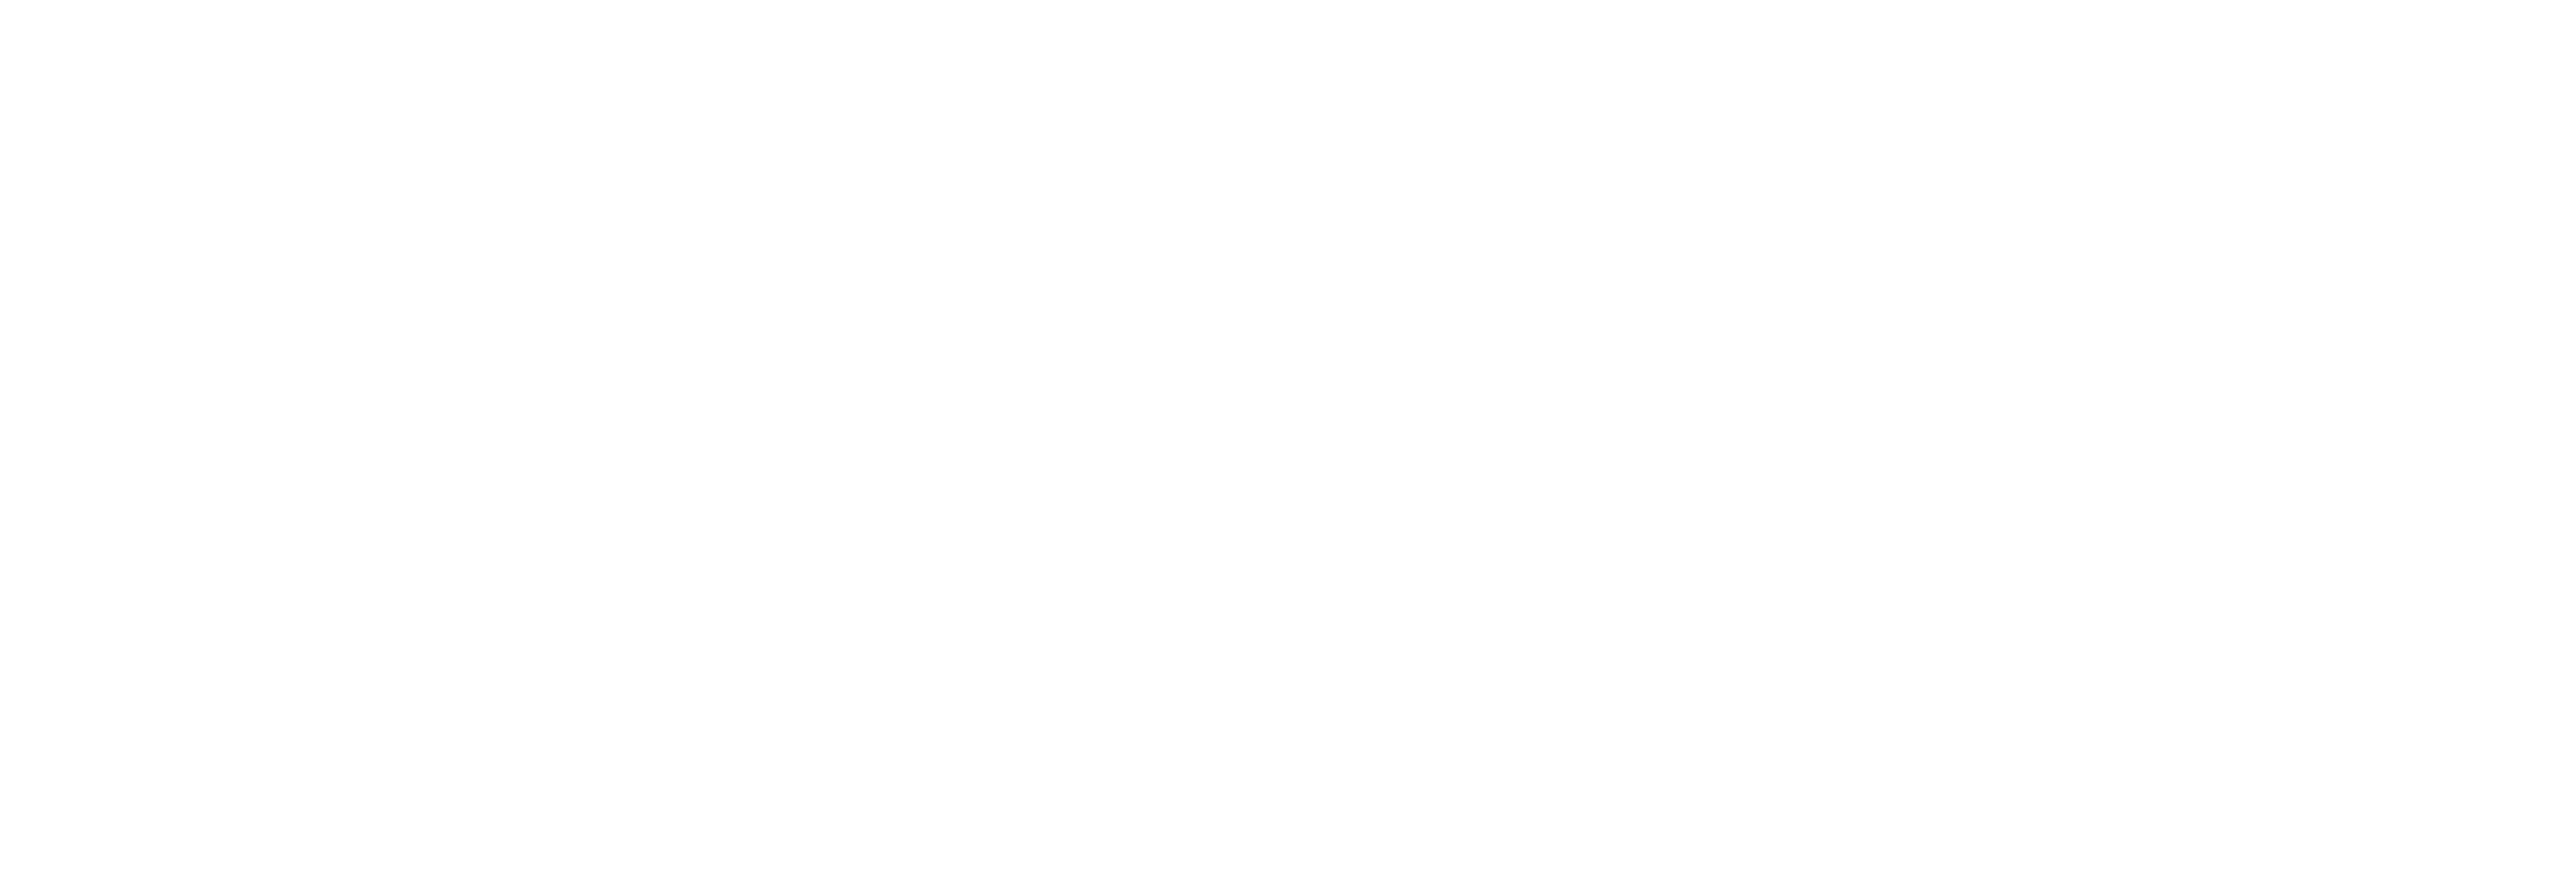 The Swan Princess: Kingdom of Music logo